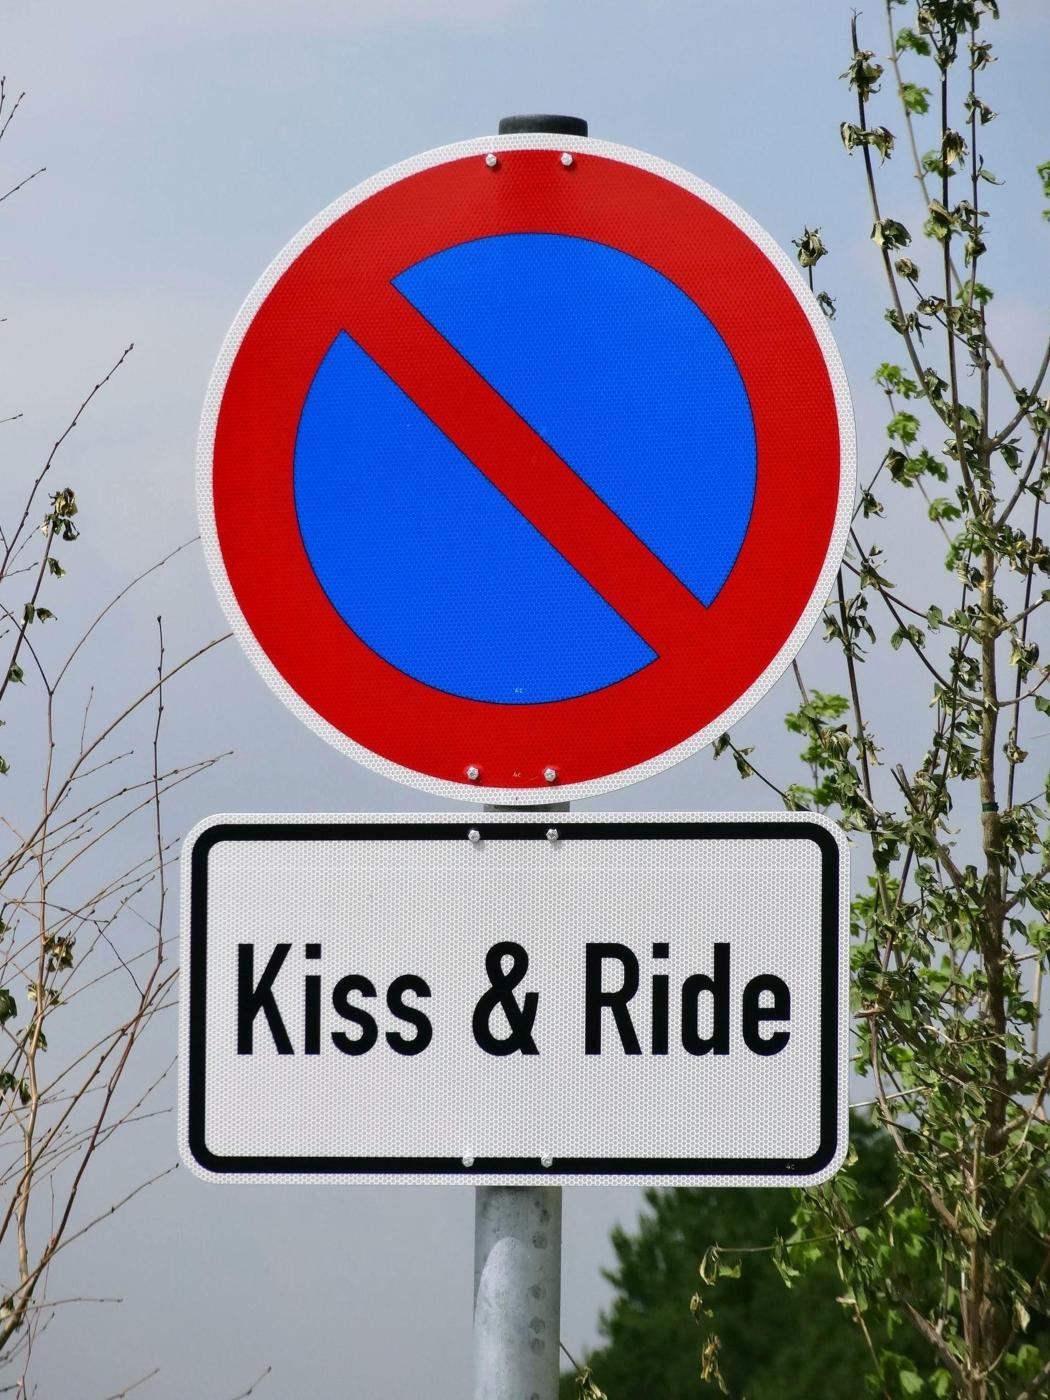 Kiss & ride